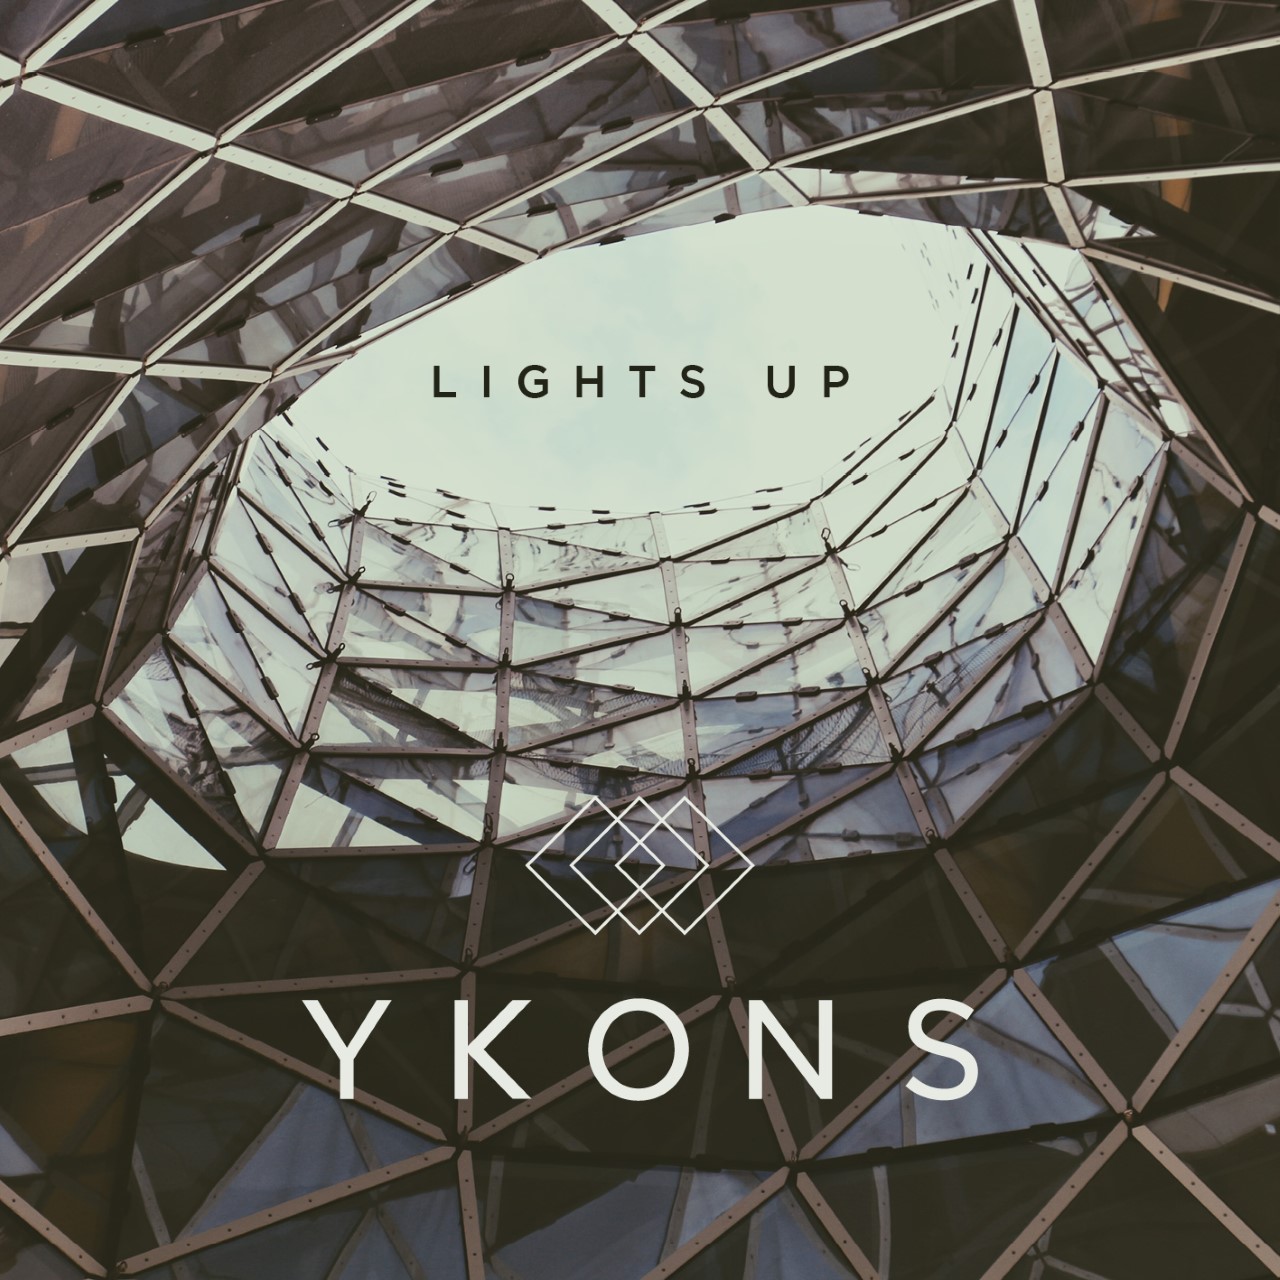 Ykons - Lights up